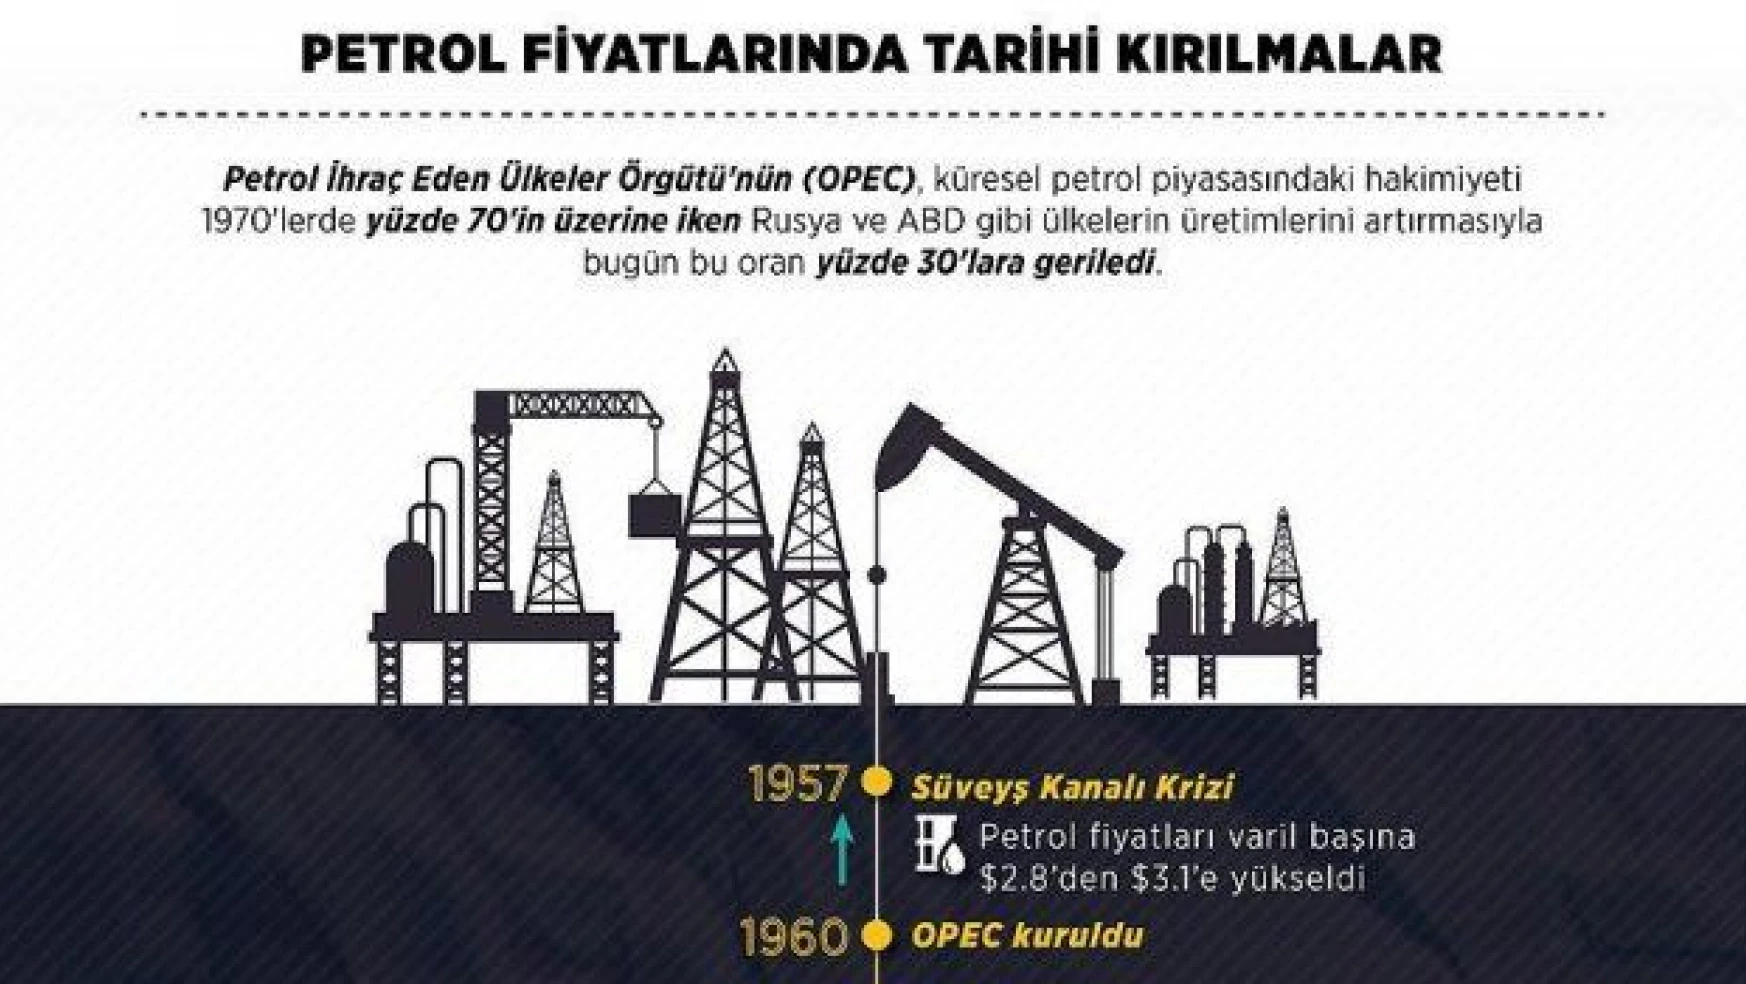 OPEC'in petrol piyasasında gücü azalıyor